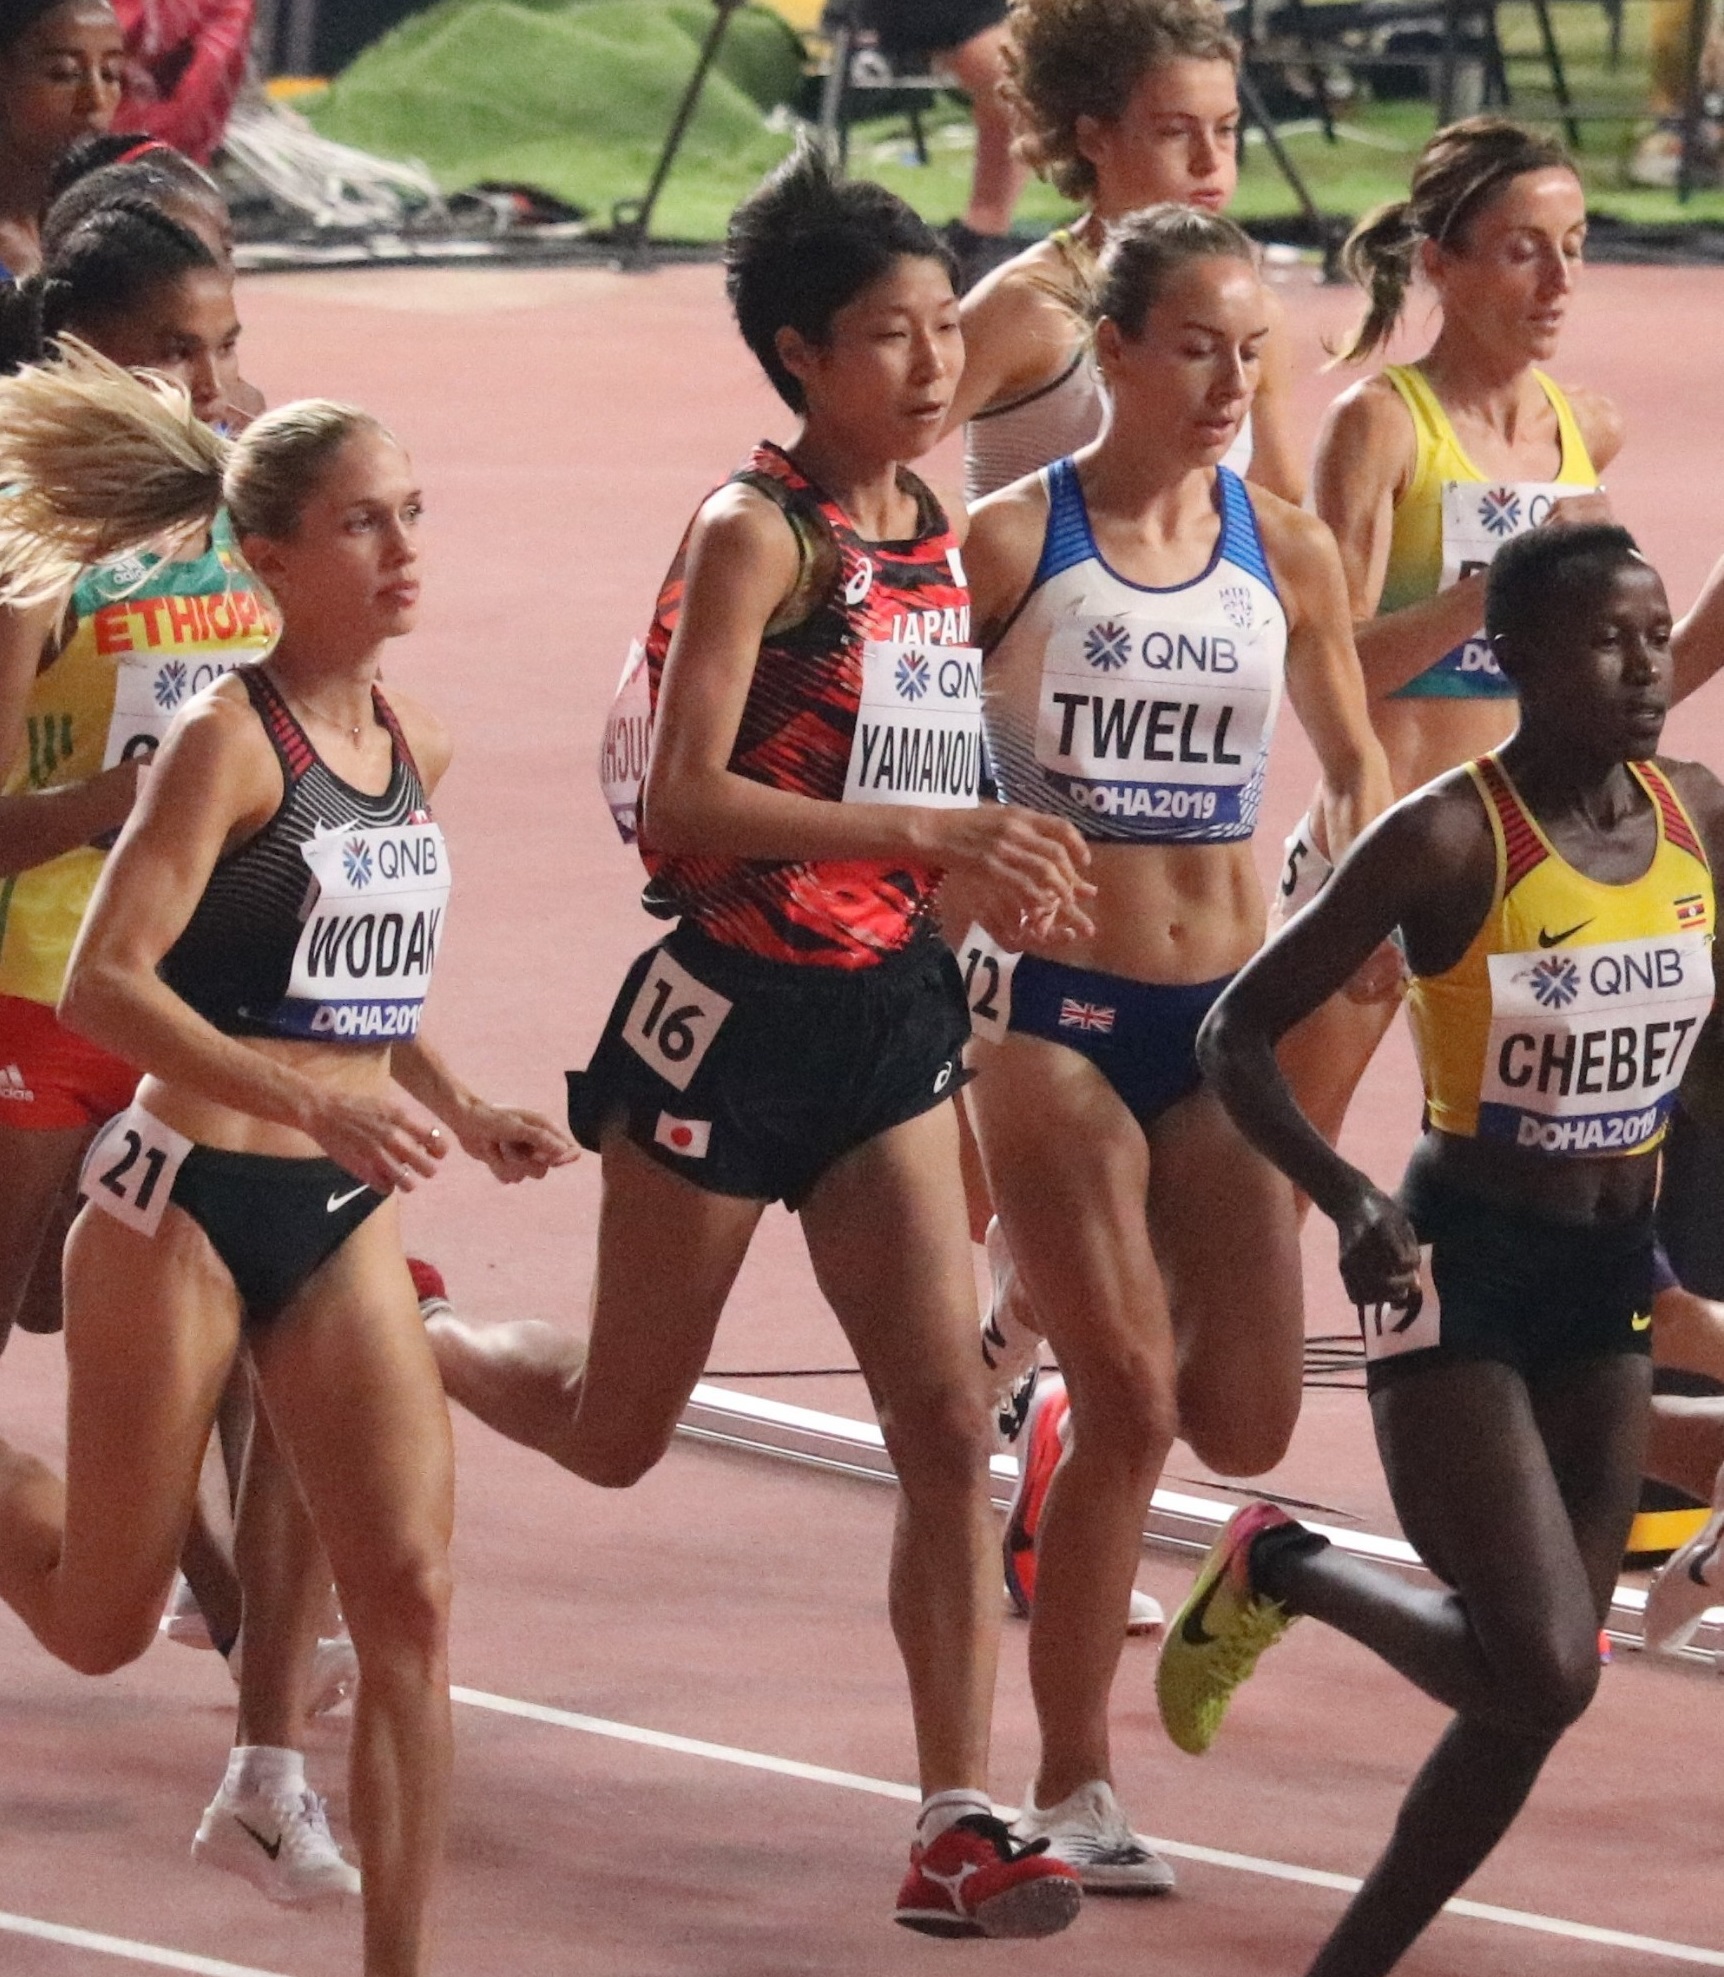 第17回世界陸上競技選手権大会 女子10000mの結果 京セラ女子陸上競技部 京セラ